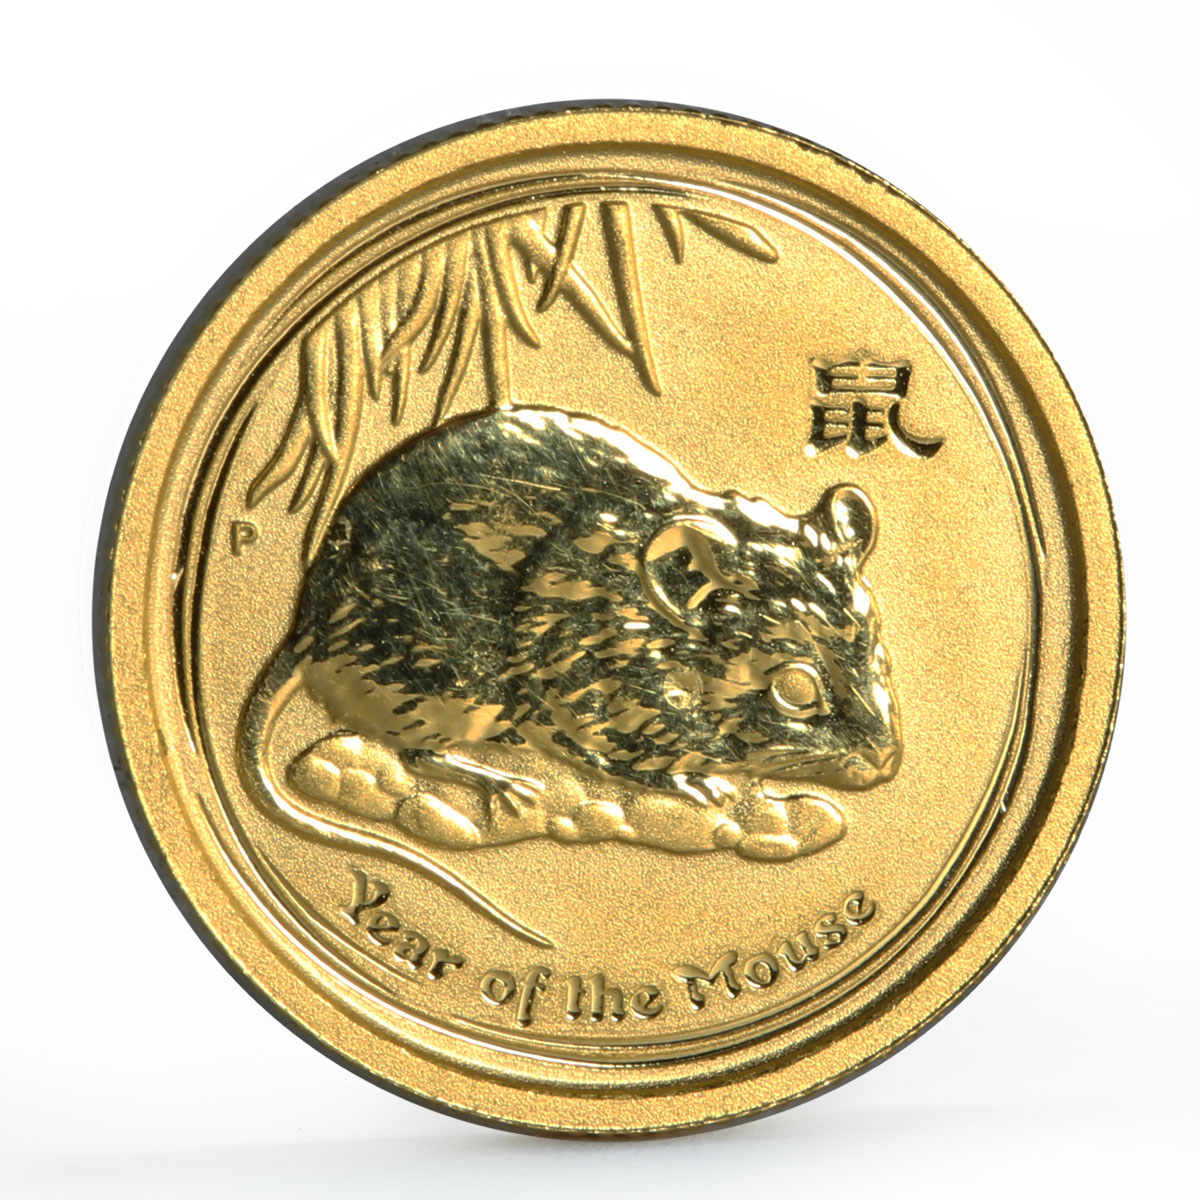 Australia 5 dollars Lunar Calendar series Year of the Mouse 1/20 gold coin 2008